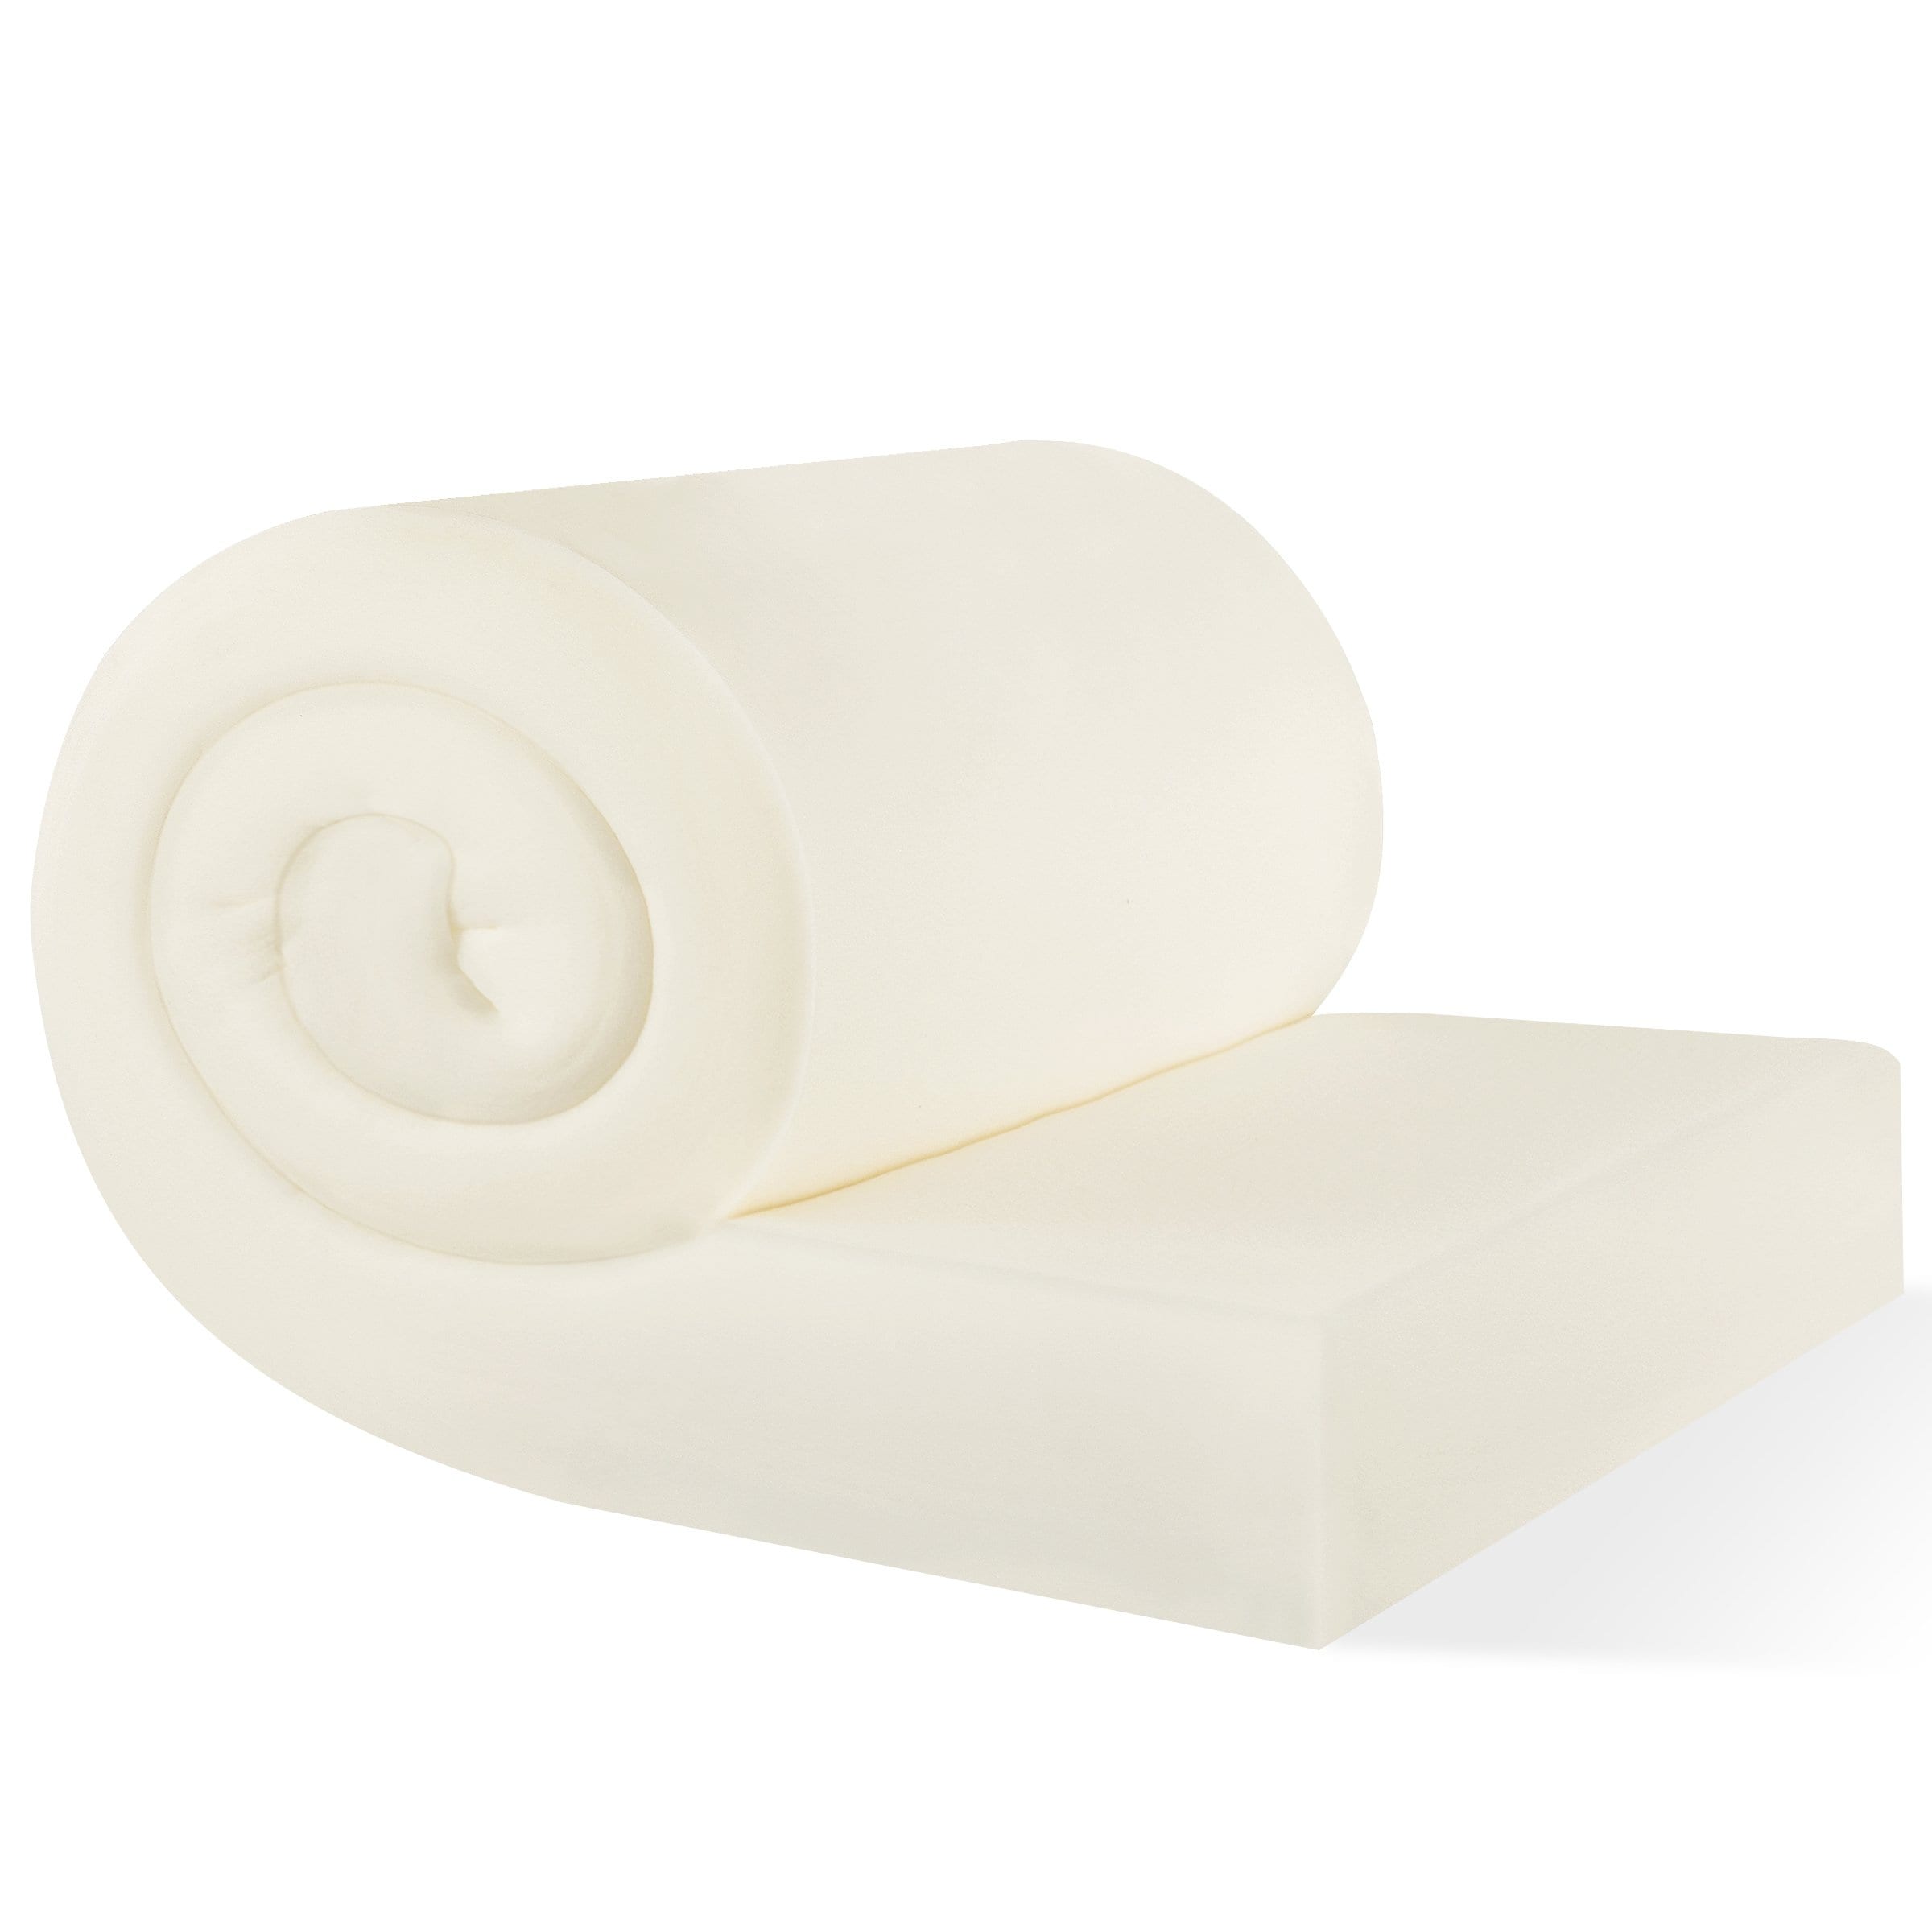 24 X 25 Upholstery Foam Cushion, High Density, Chair Cushion Foam